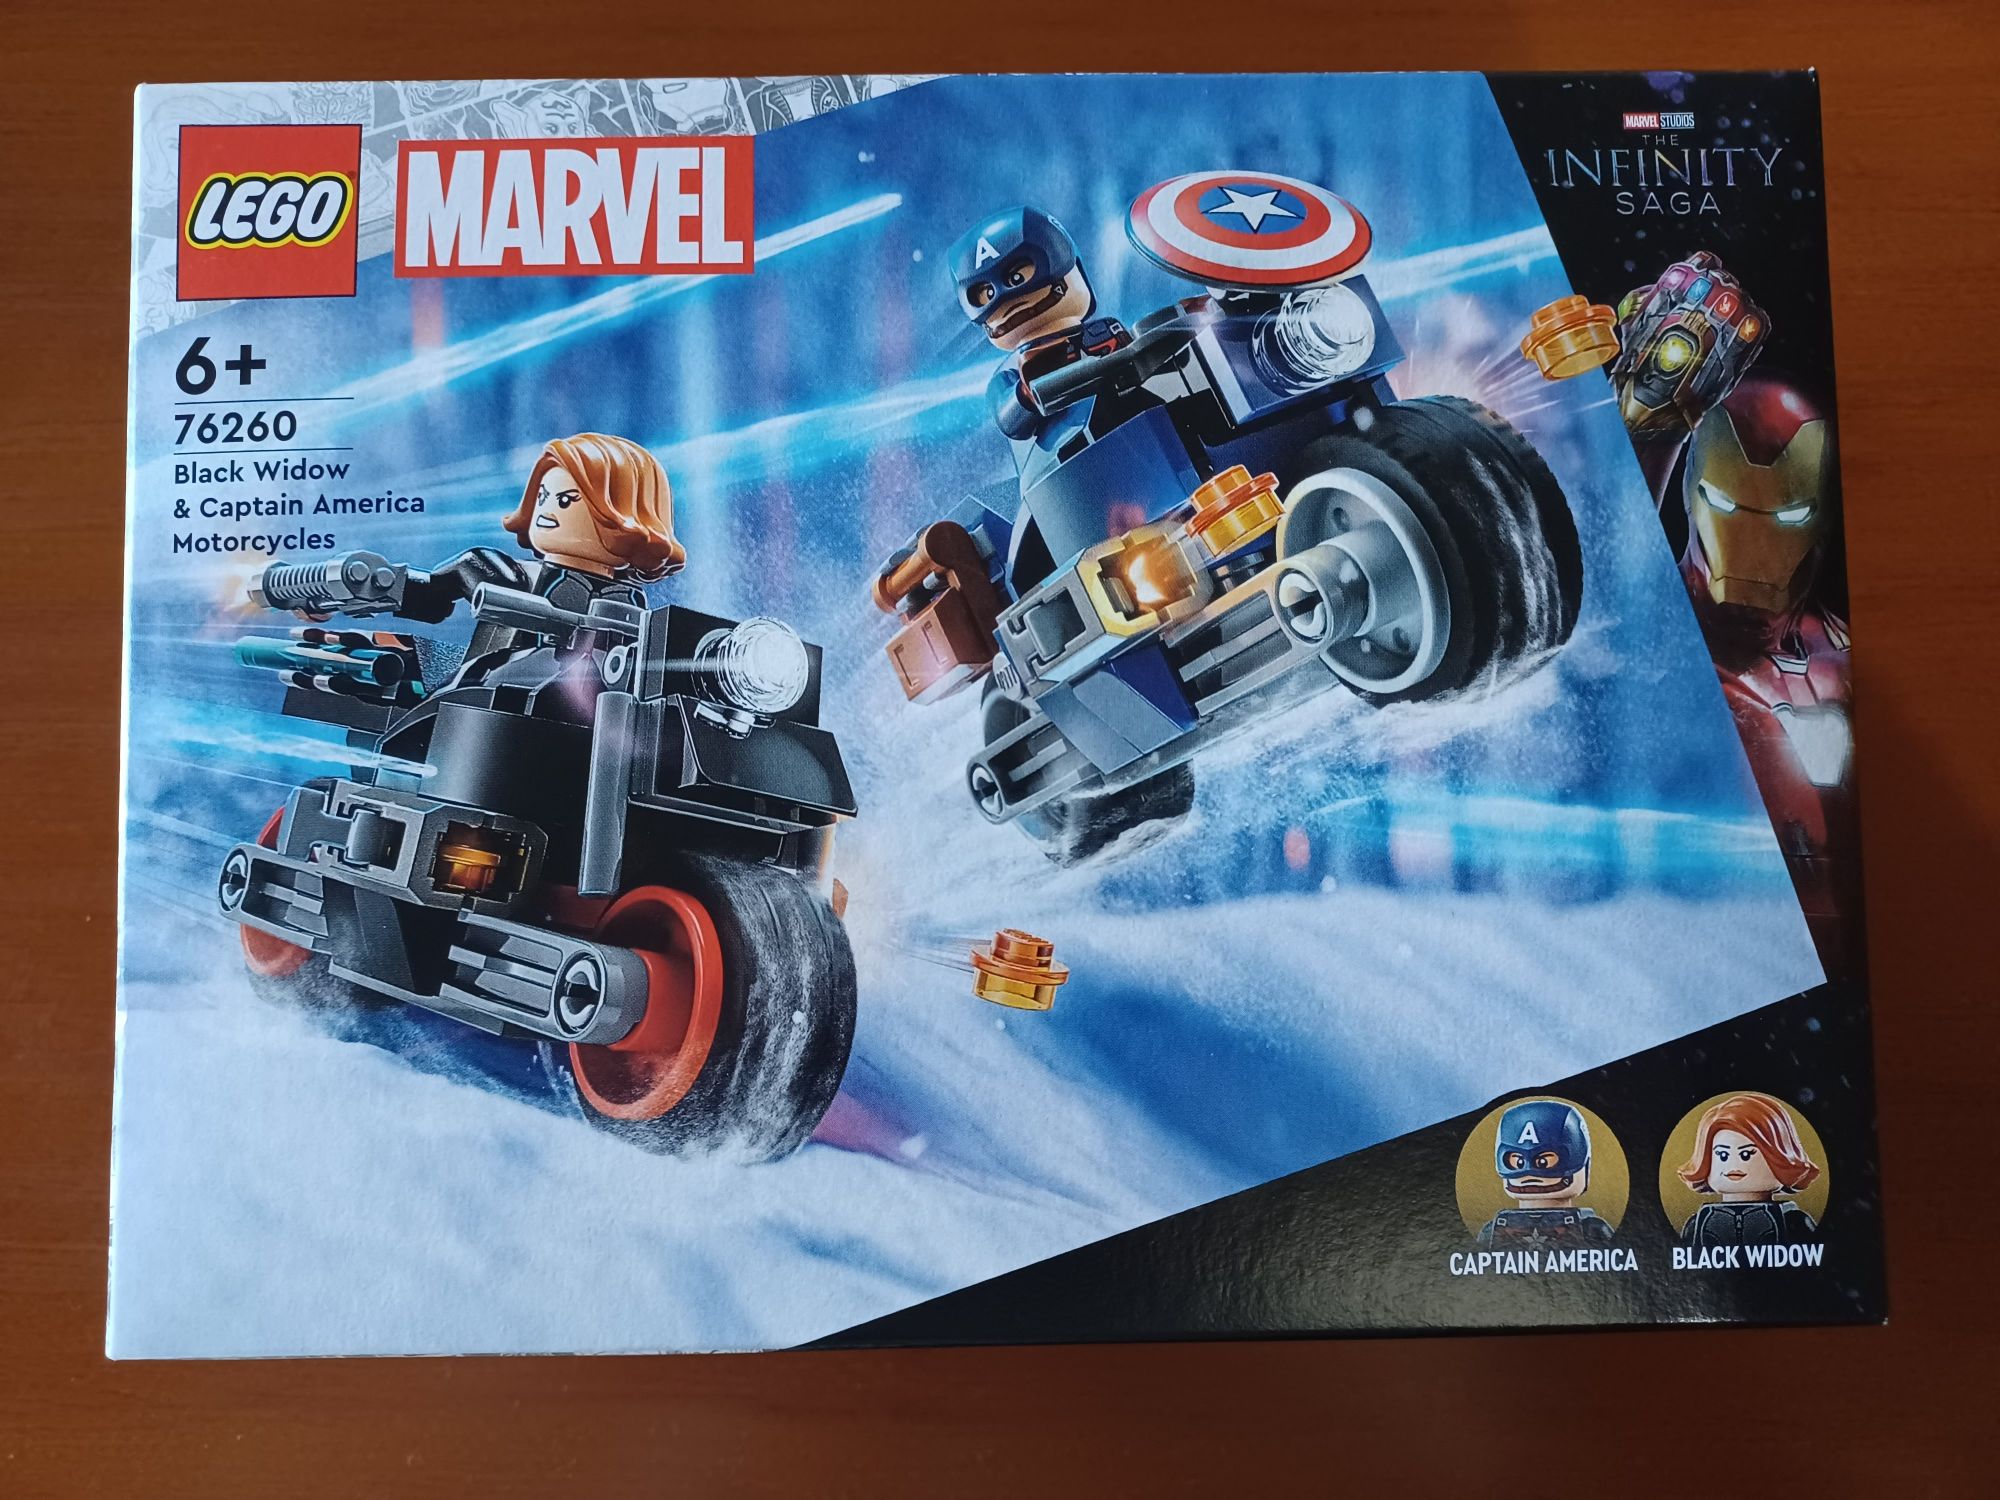 Lego Marvel "Black Widow & Captain America Motocycles" 76260